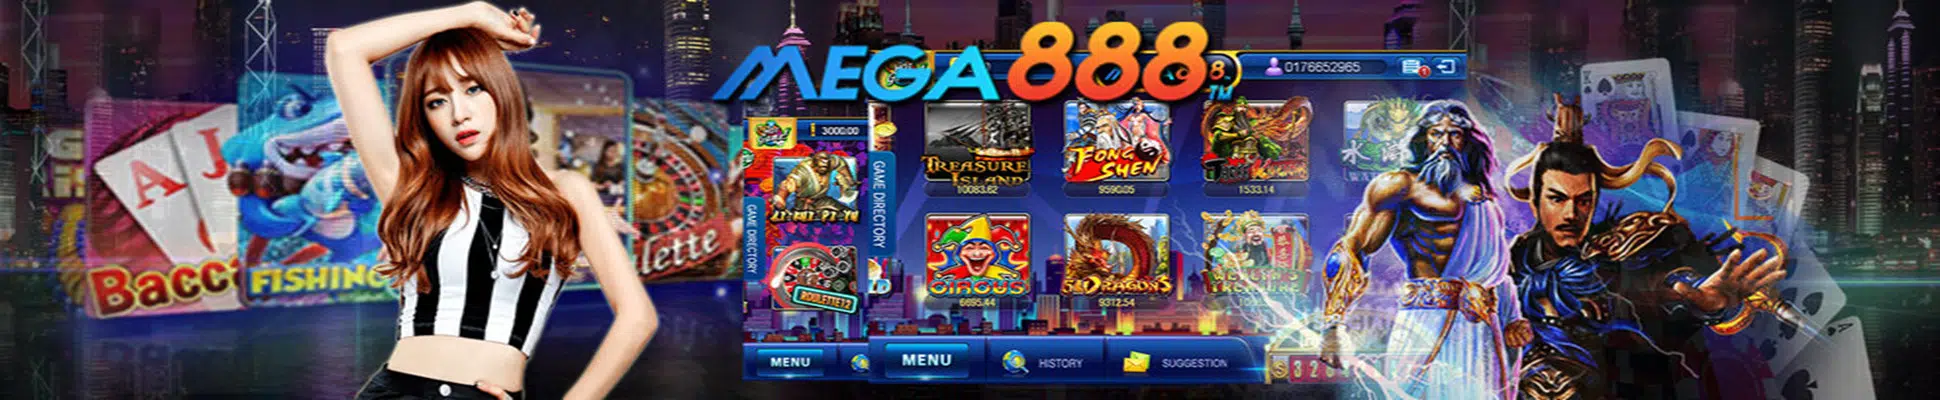 Mega888-BIGWIN369-ทดลองเล่น6